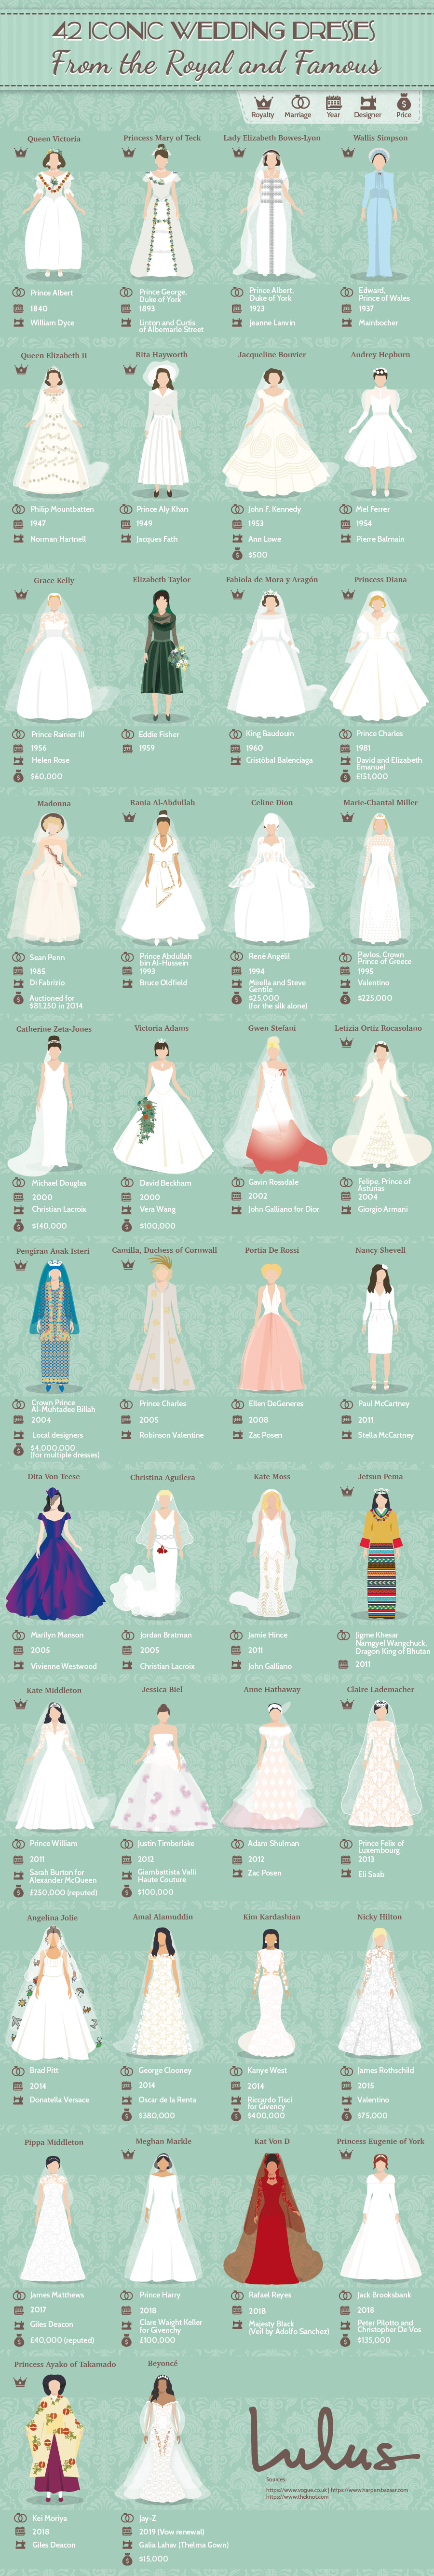 iconic wedding dresses